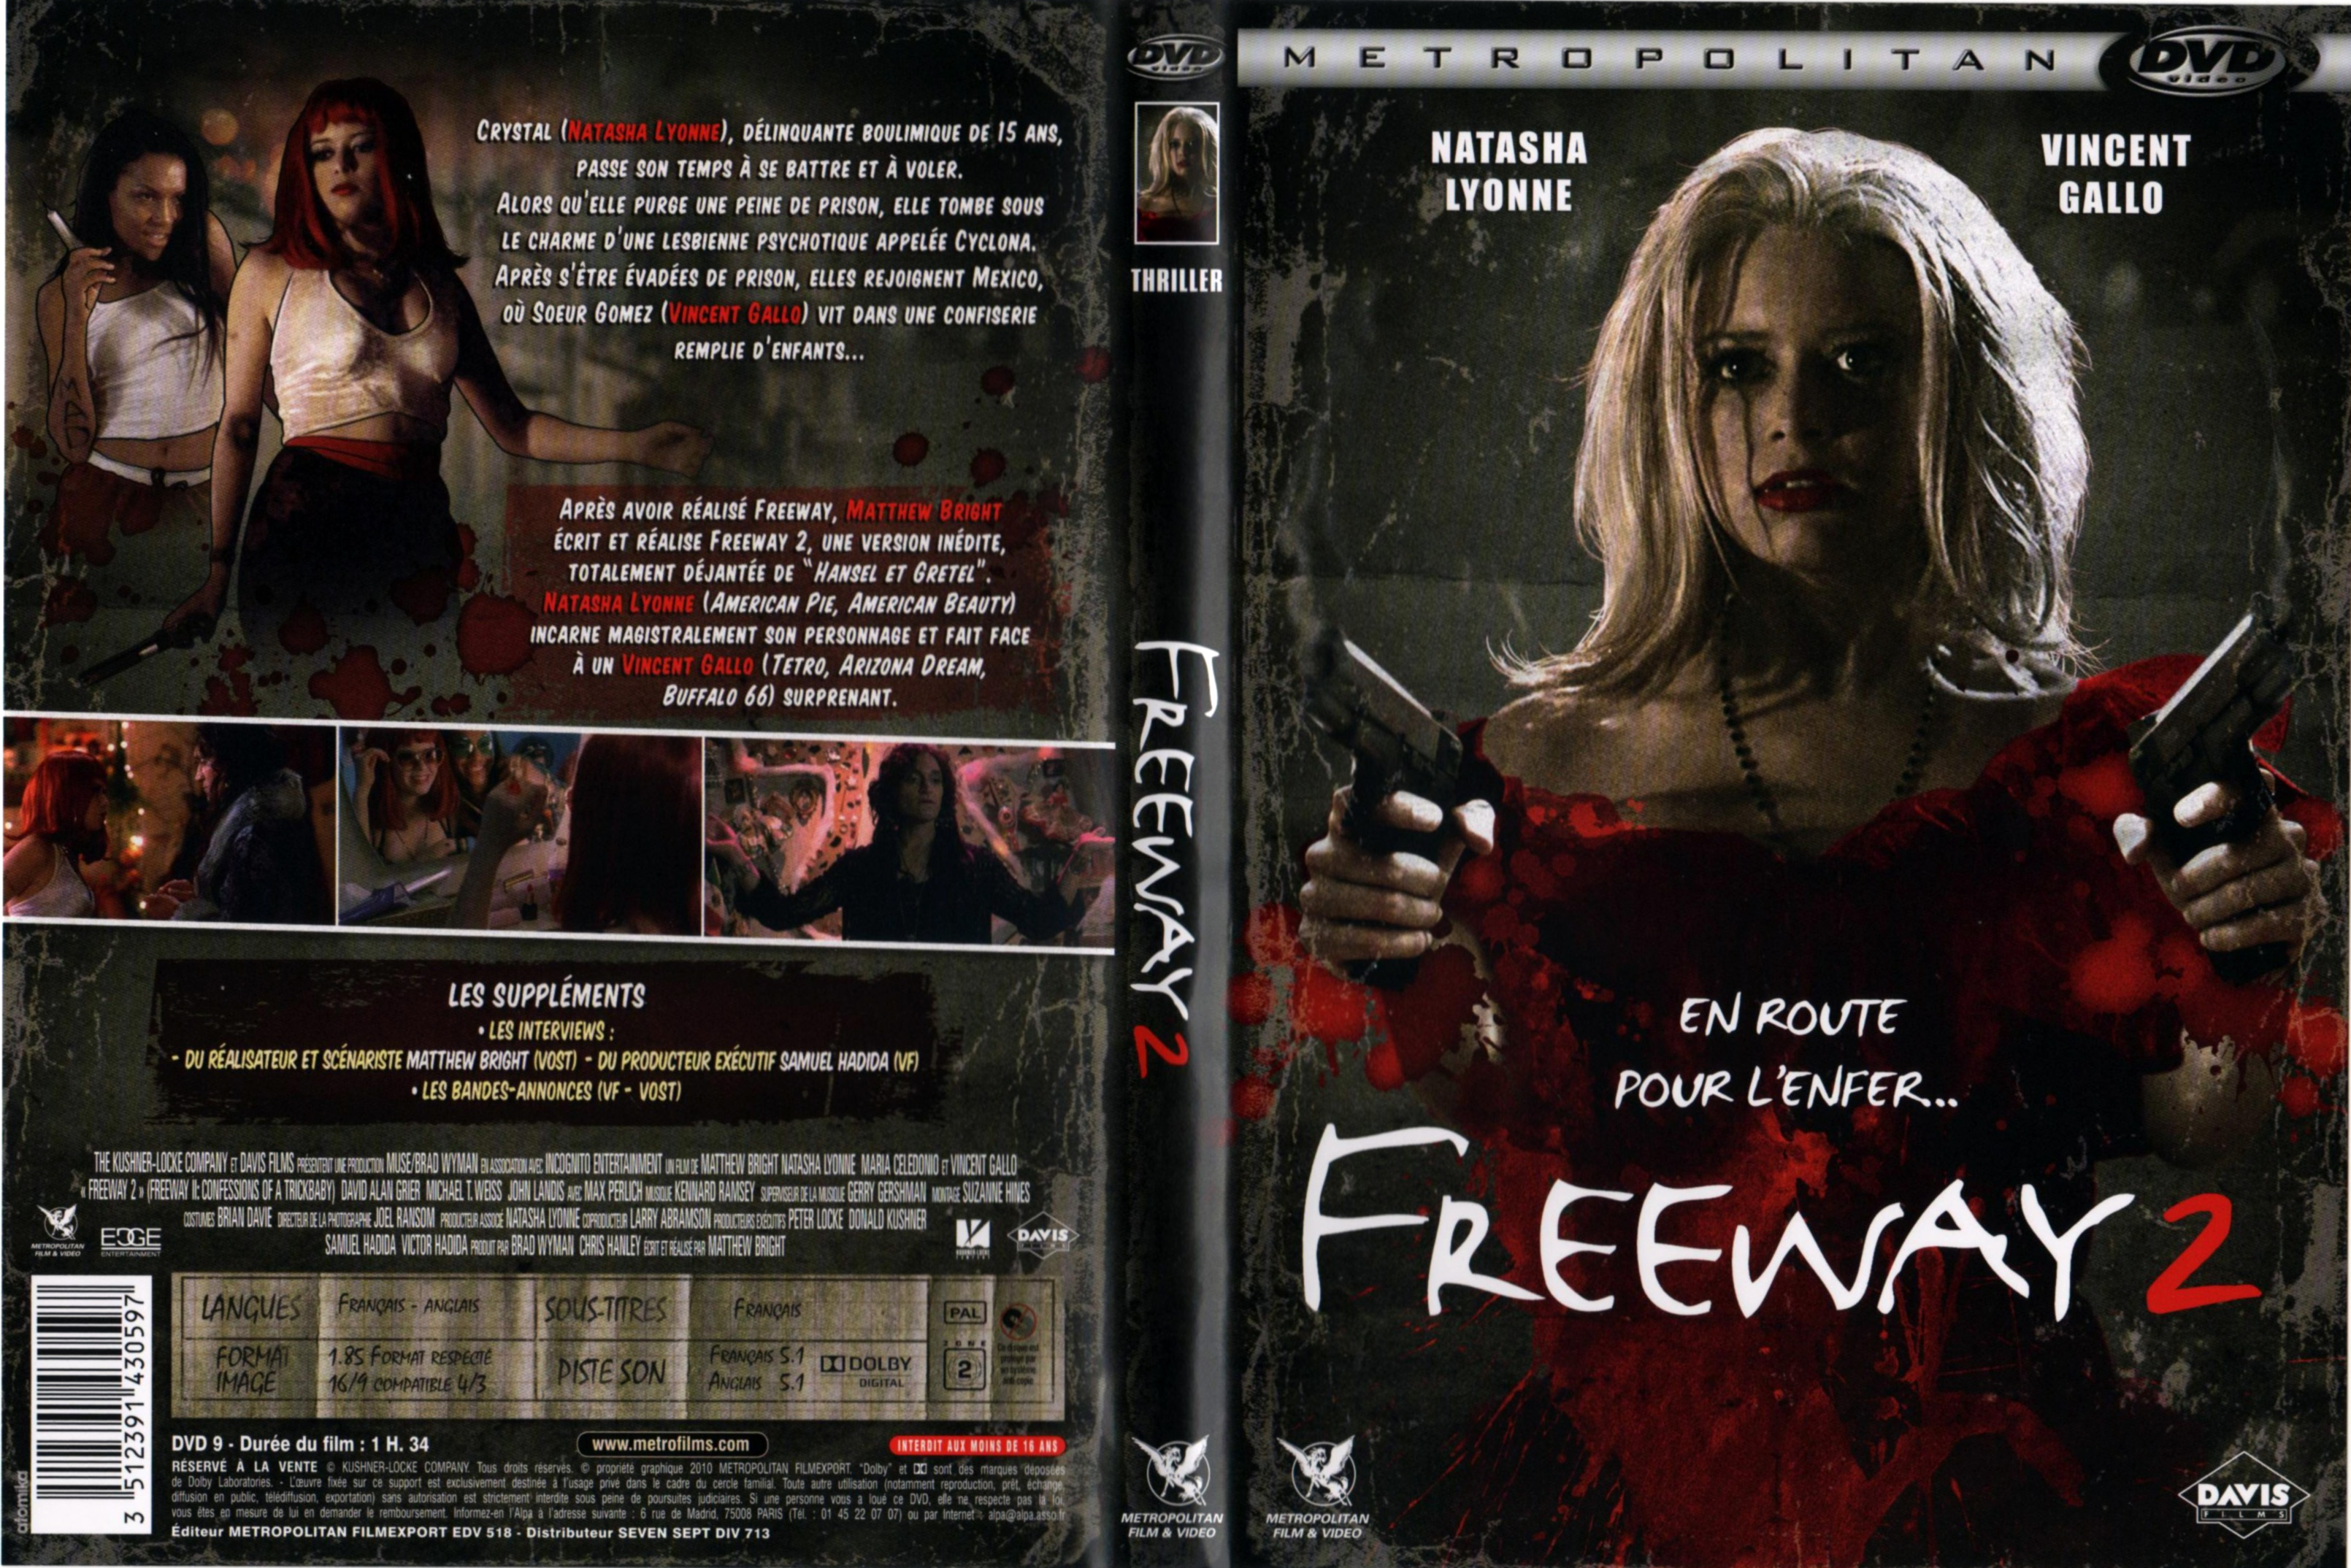 Jaquette DVD Freeway 2